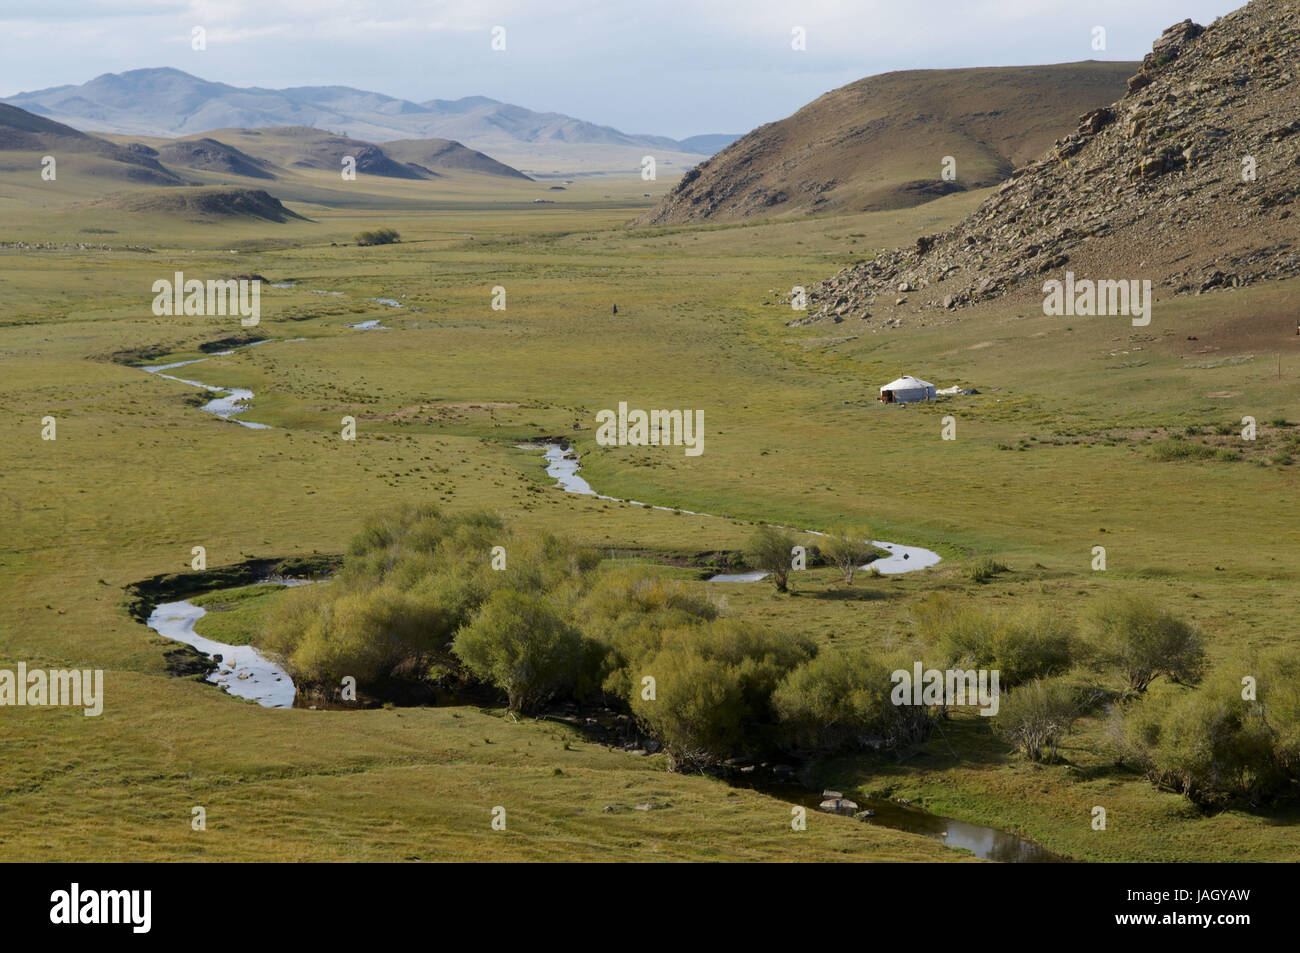 Mongolia,Asia centrale,provincia Arkhangai,steppa,River Valley,nomad,supporto,Jurte, Foto Stock